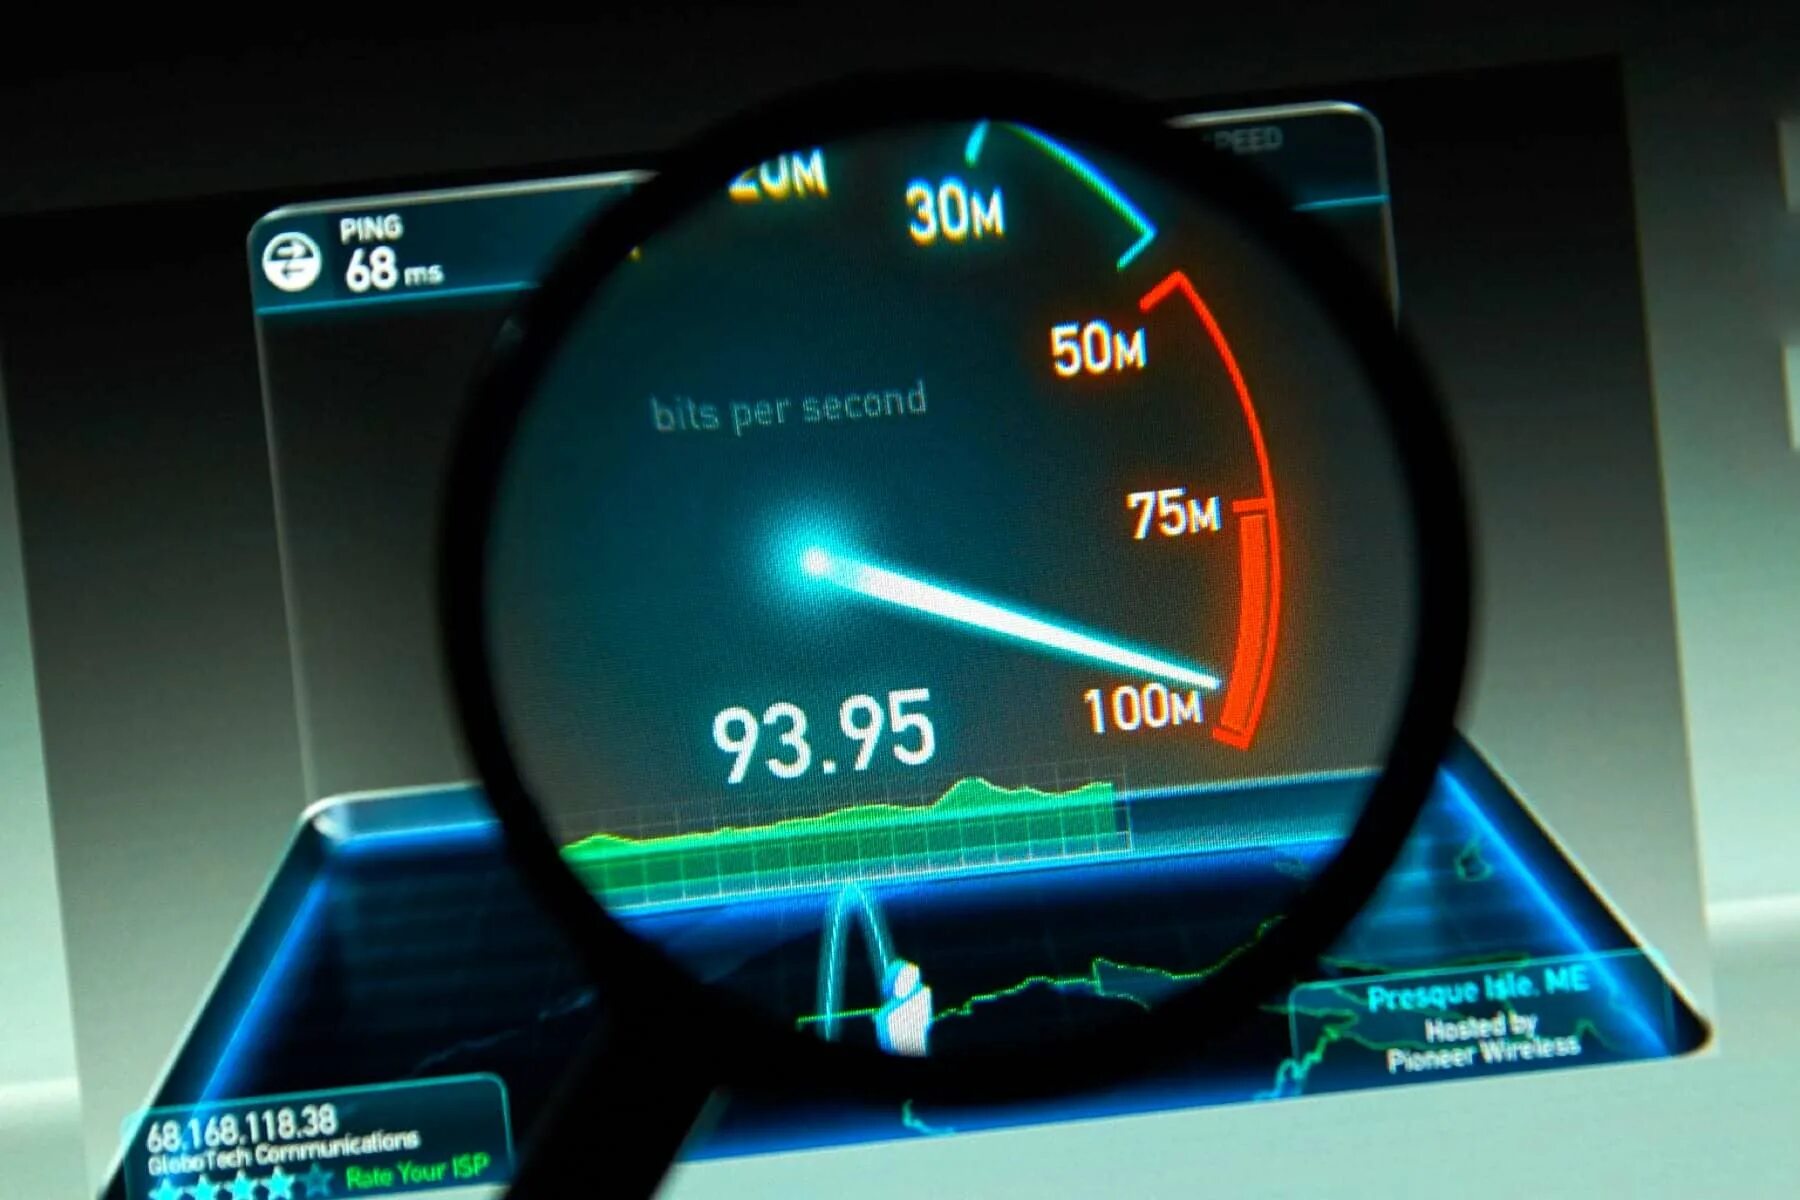 Connection speed. Скорость интернета. Высокая скорость интернета. Спидометр скорости интернета. Самая высокая скорость интернета.